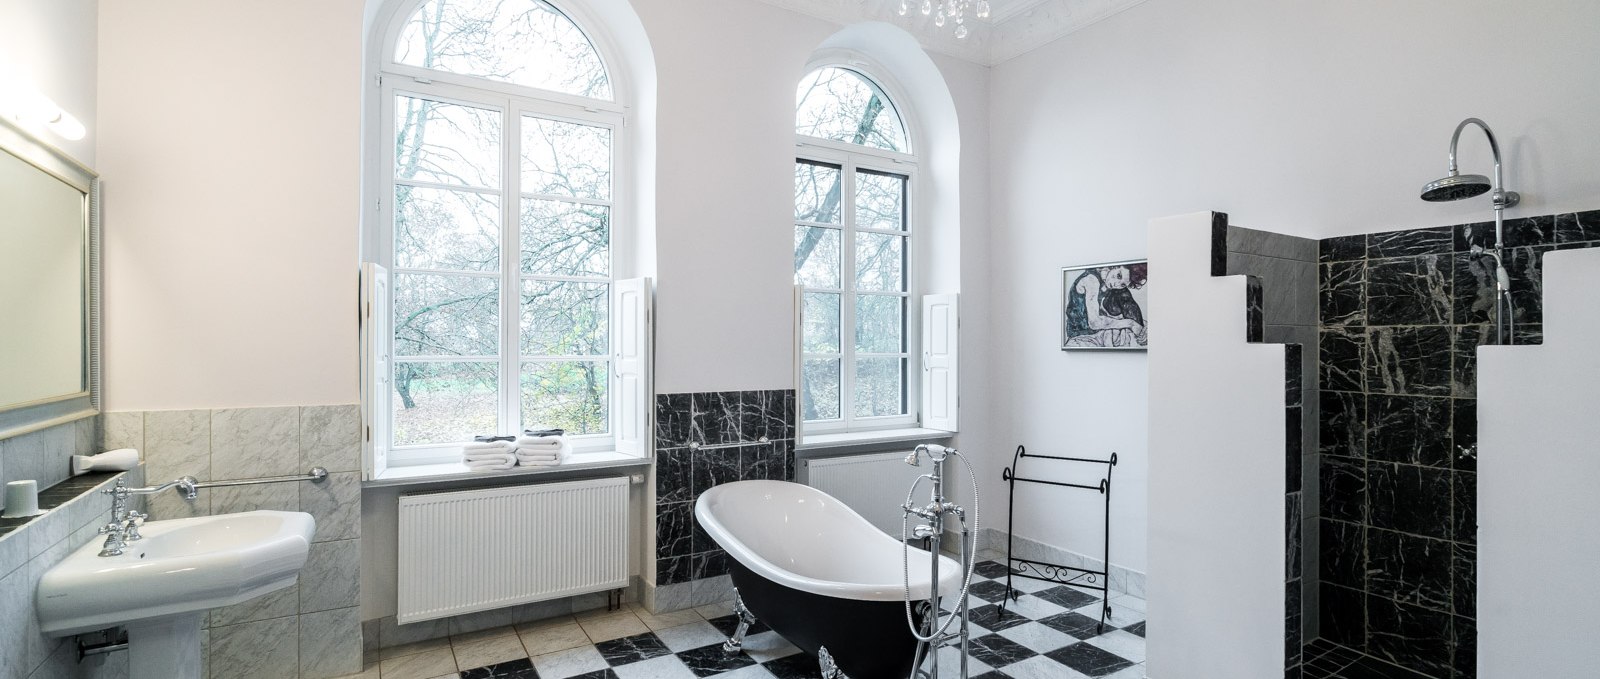 Großzügiges Badezimmer im Schlosshotel Marihn, © Copyright DOMUSimages UG